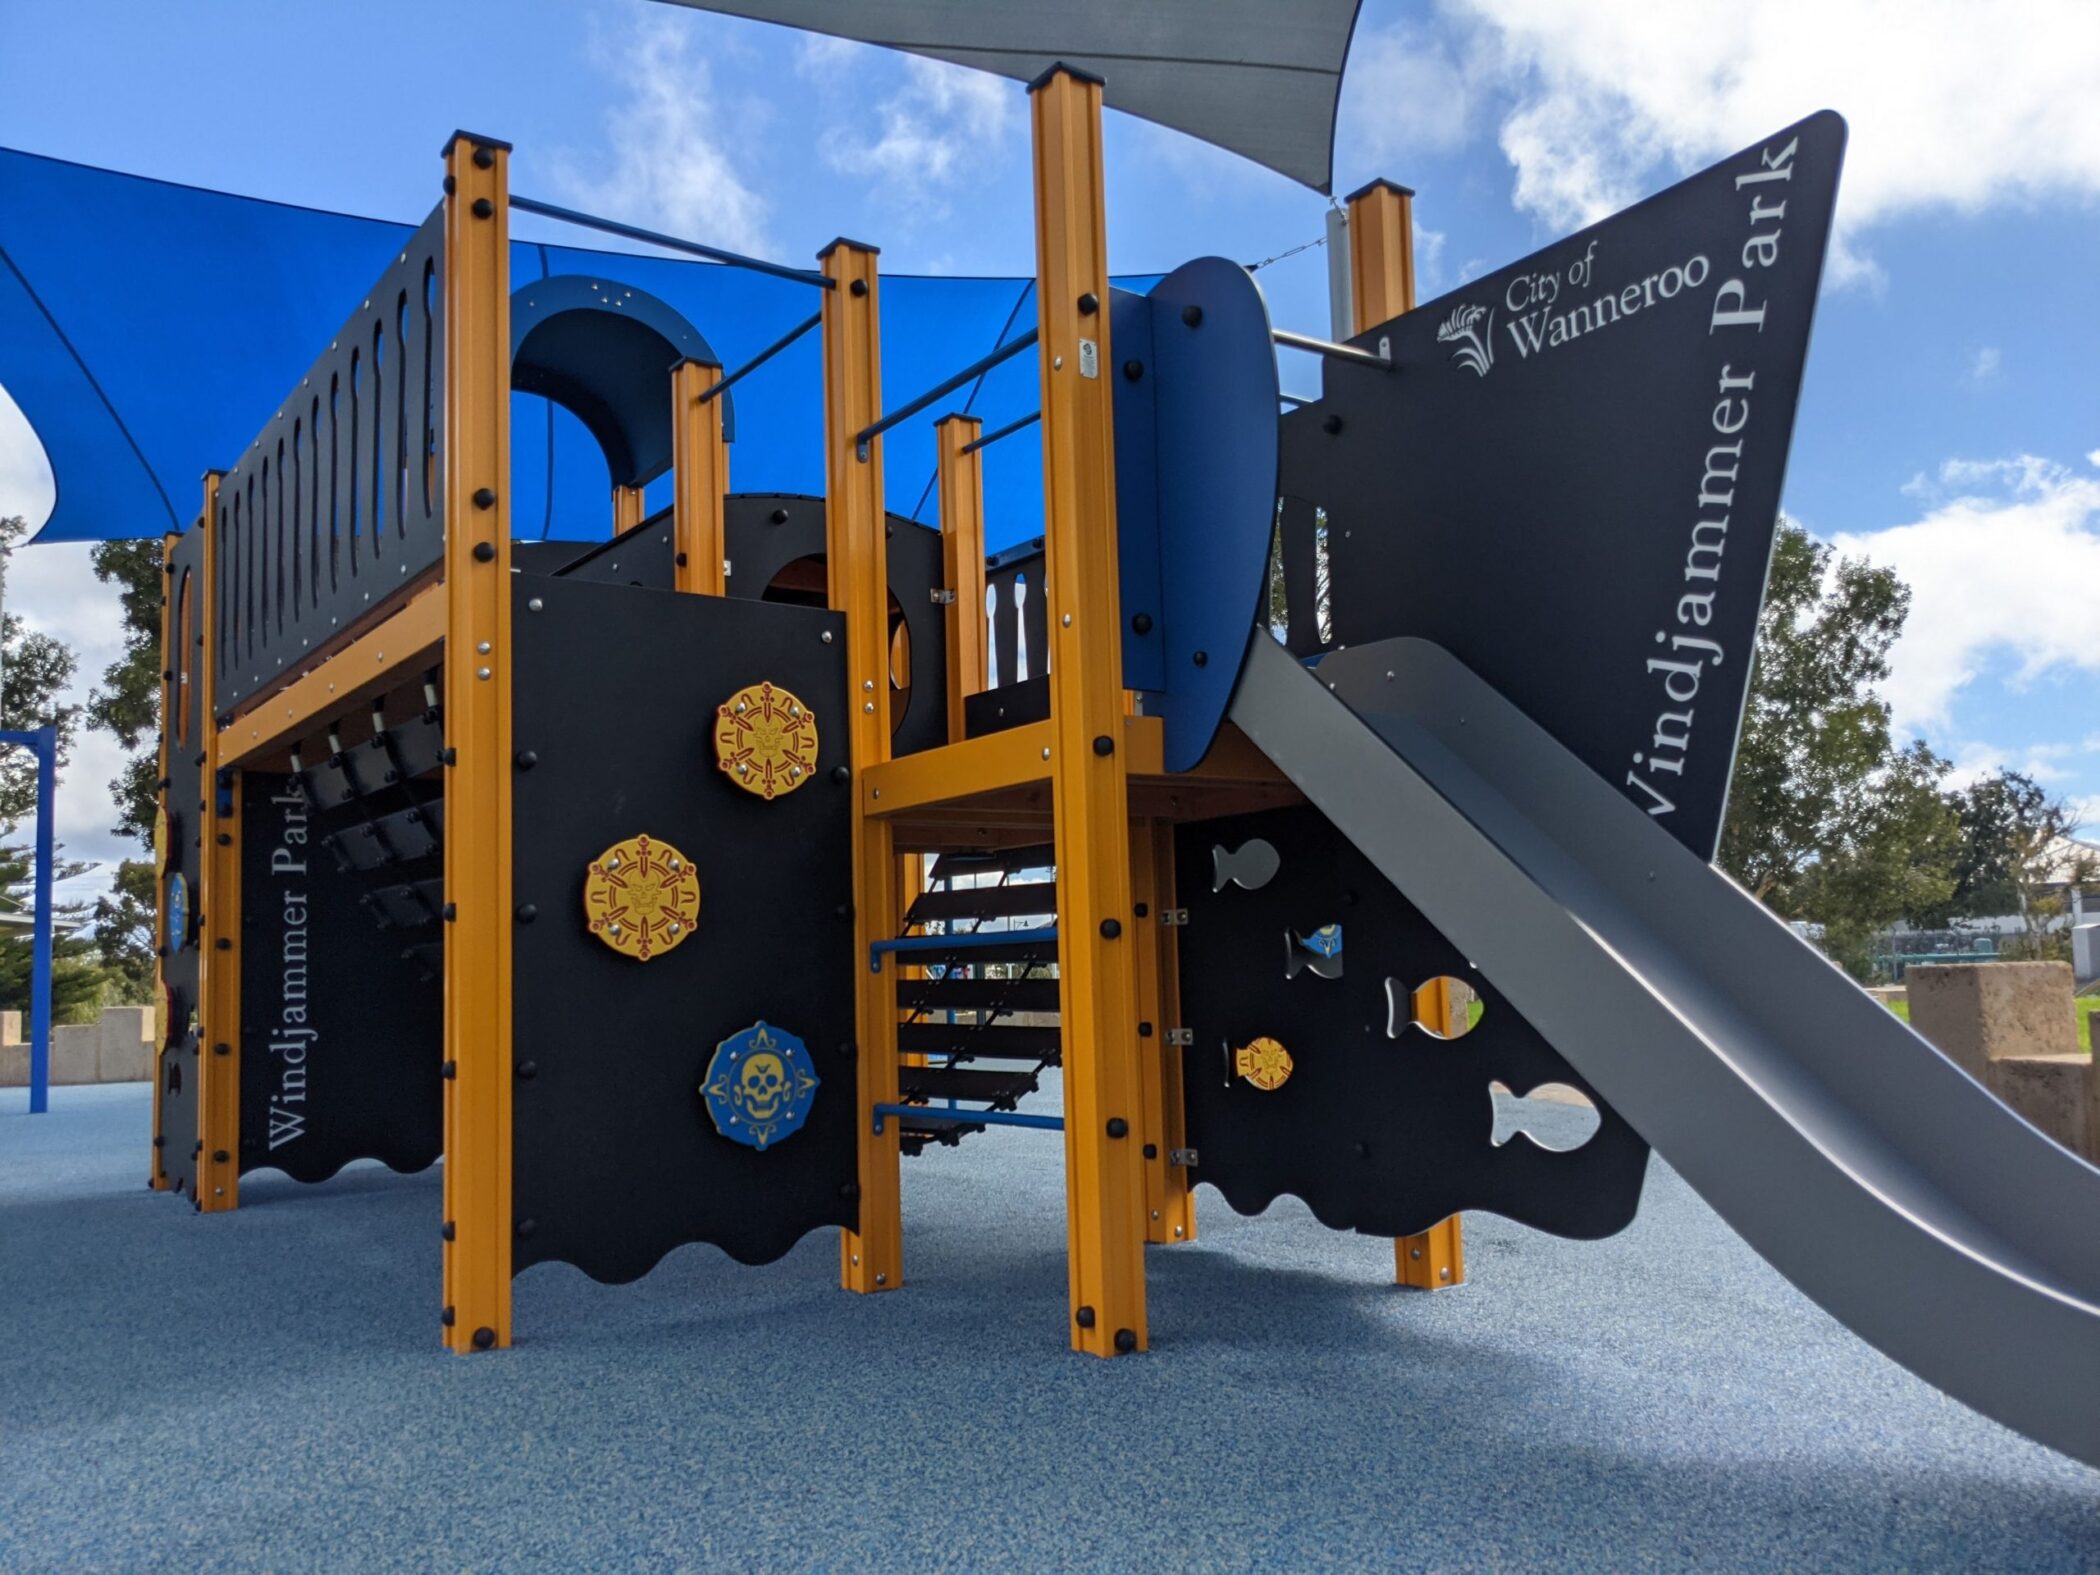 Playground in Wanneroo, Australia